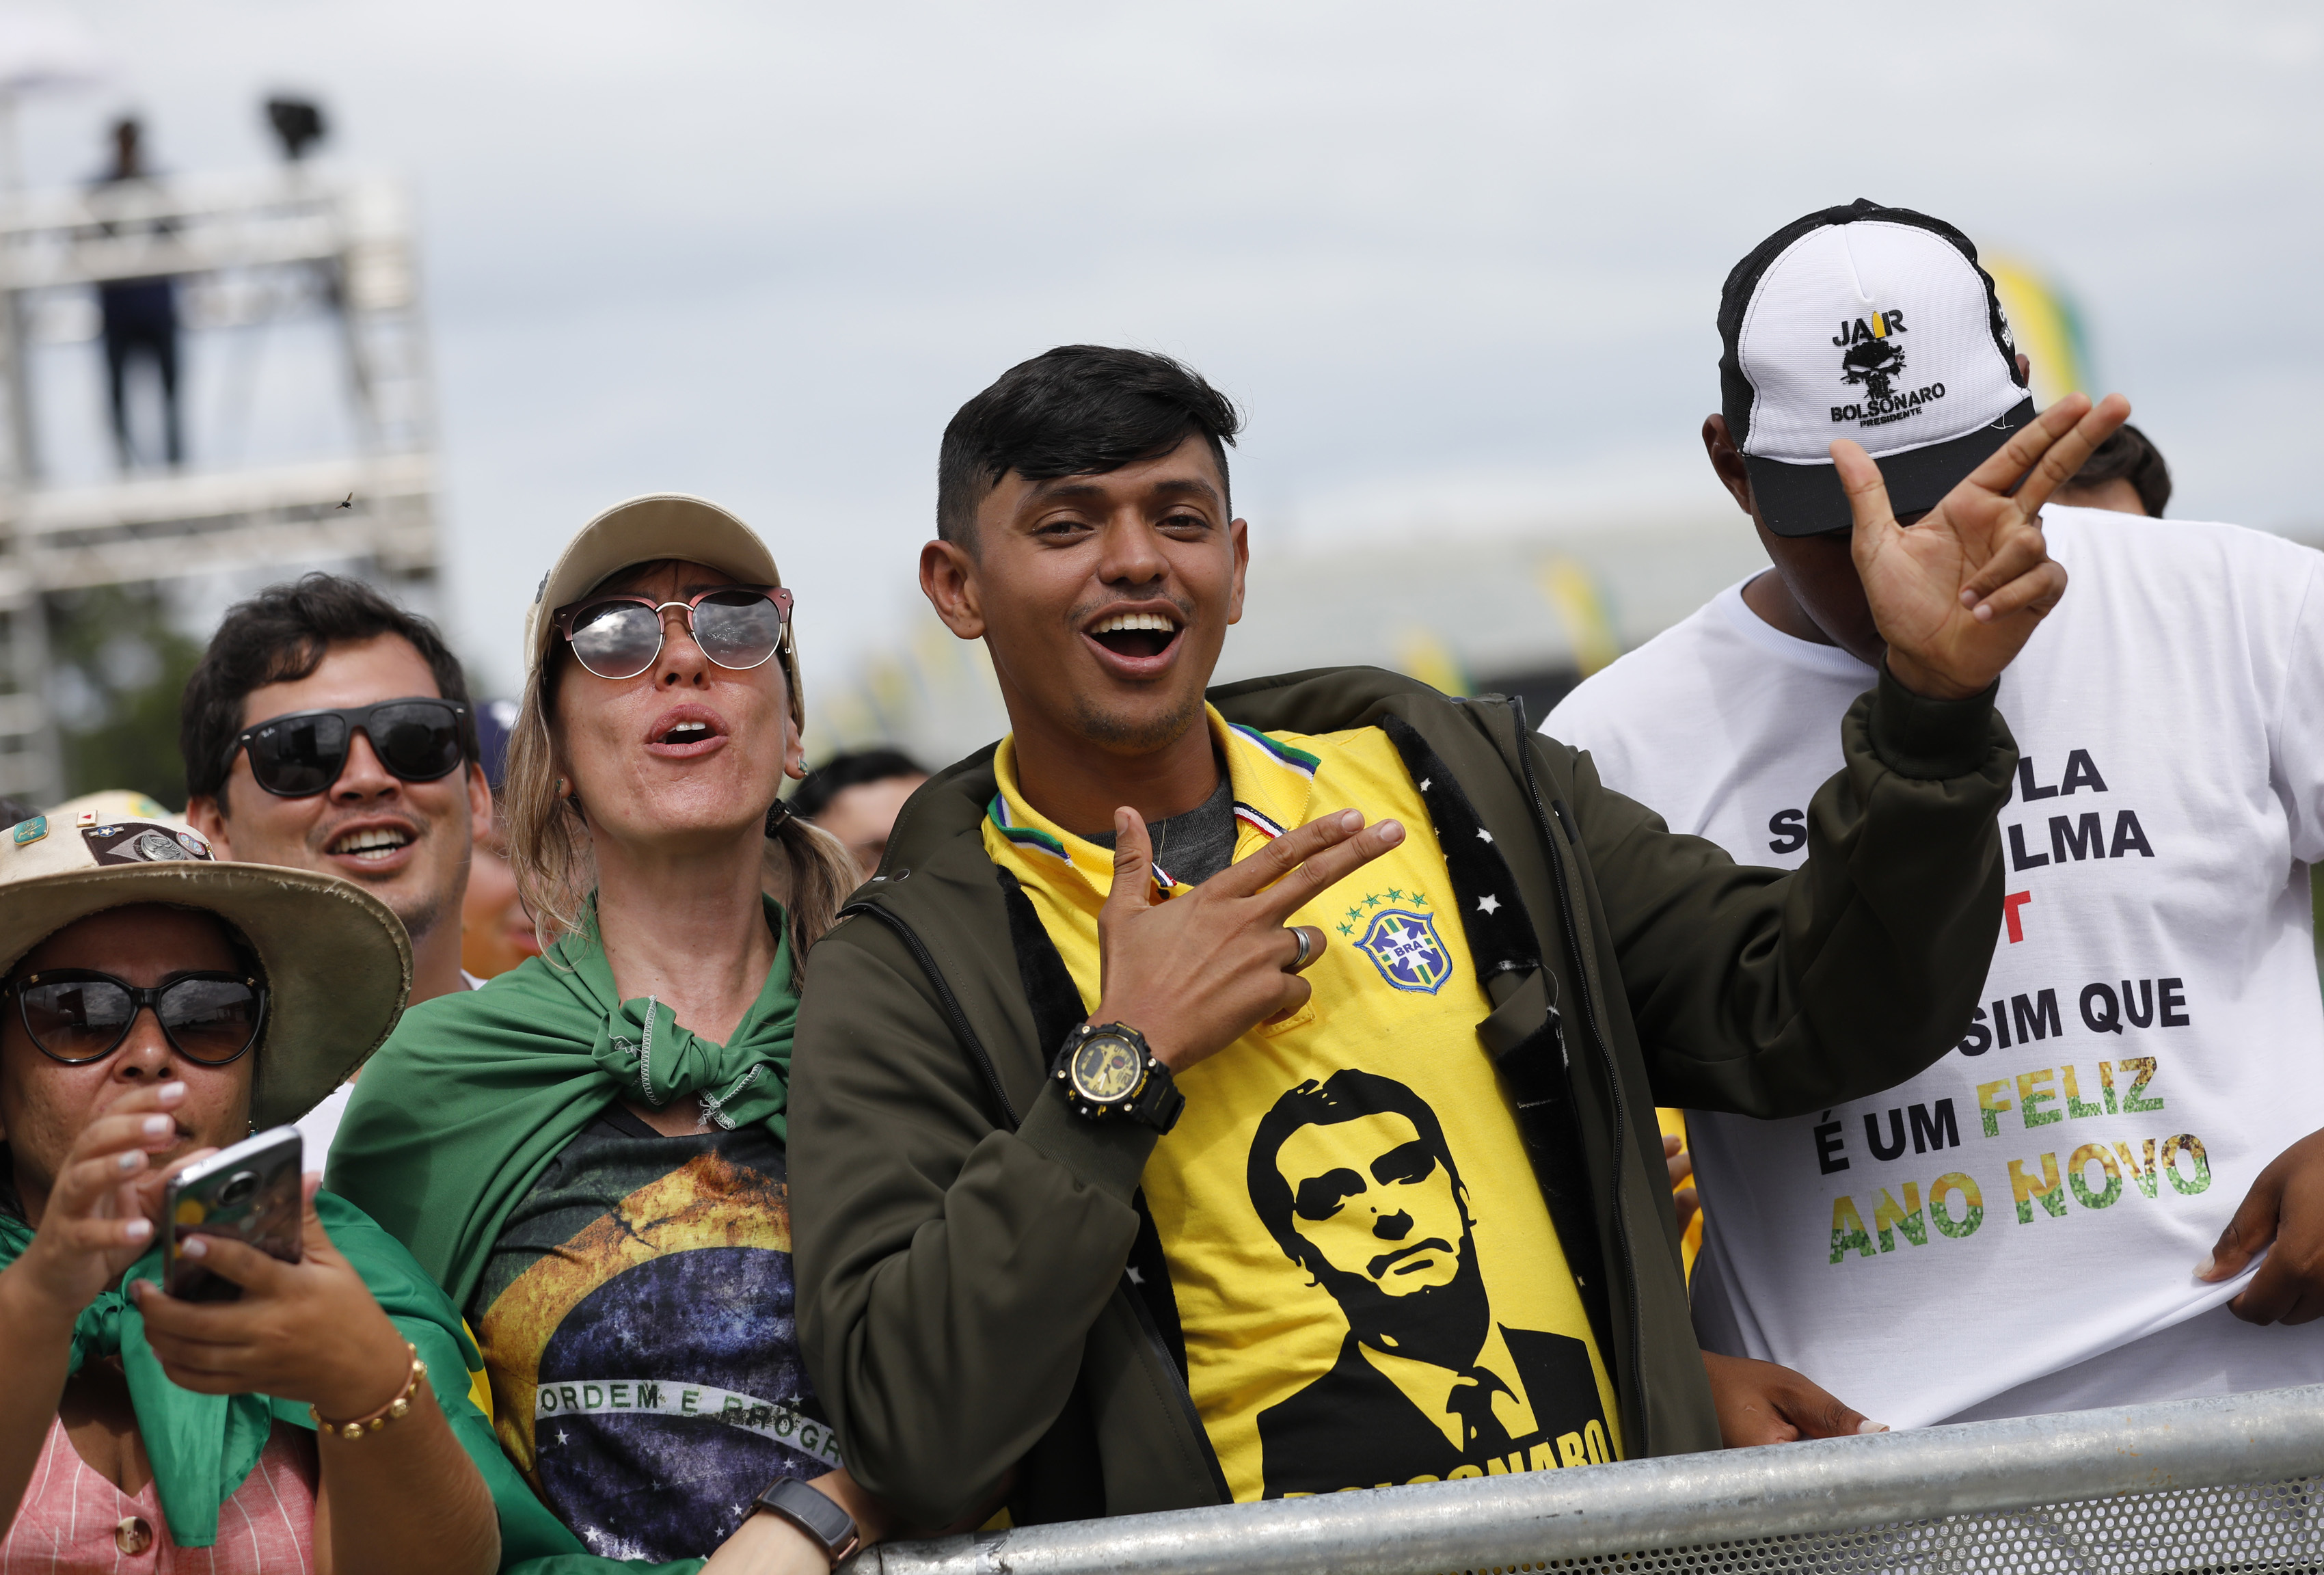 Supporters celebrate before the swearing-in ceremony of Brazil's new President Jair Bolsonaro, in front of the Planalto palace in Brasilia, Brazil, Tuesday Jan. 1, 2019. (AP Photo/Silvia Izquierdo)